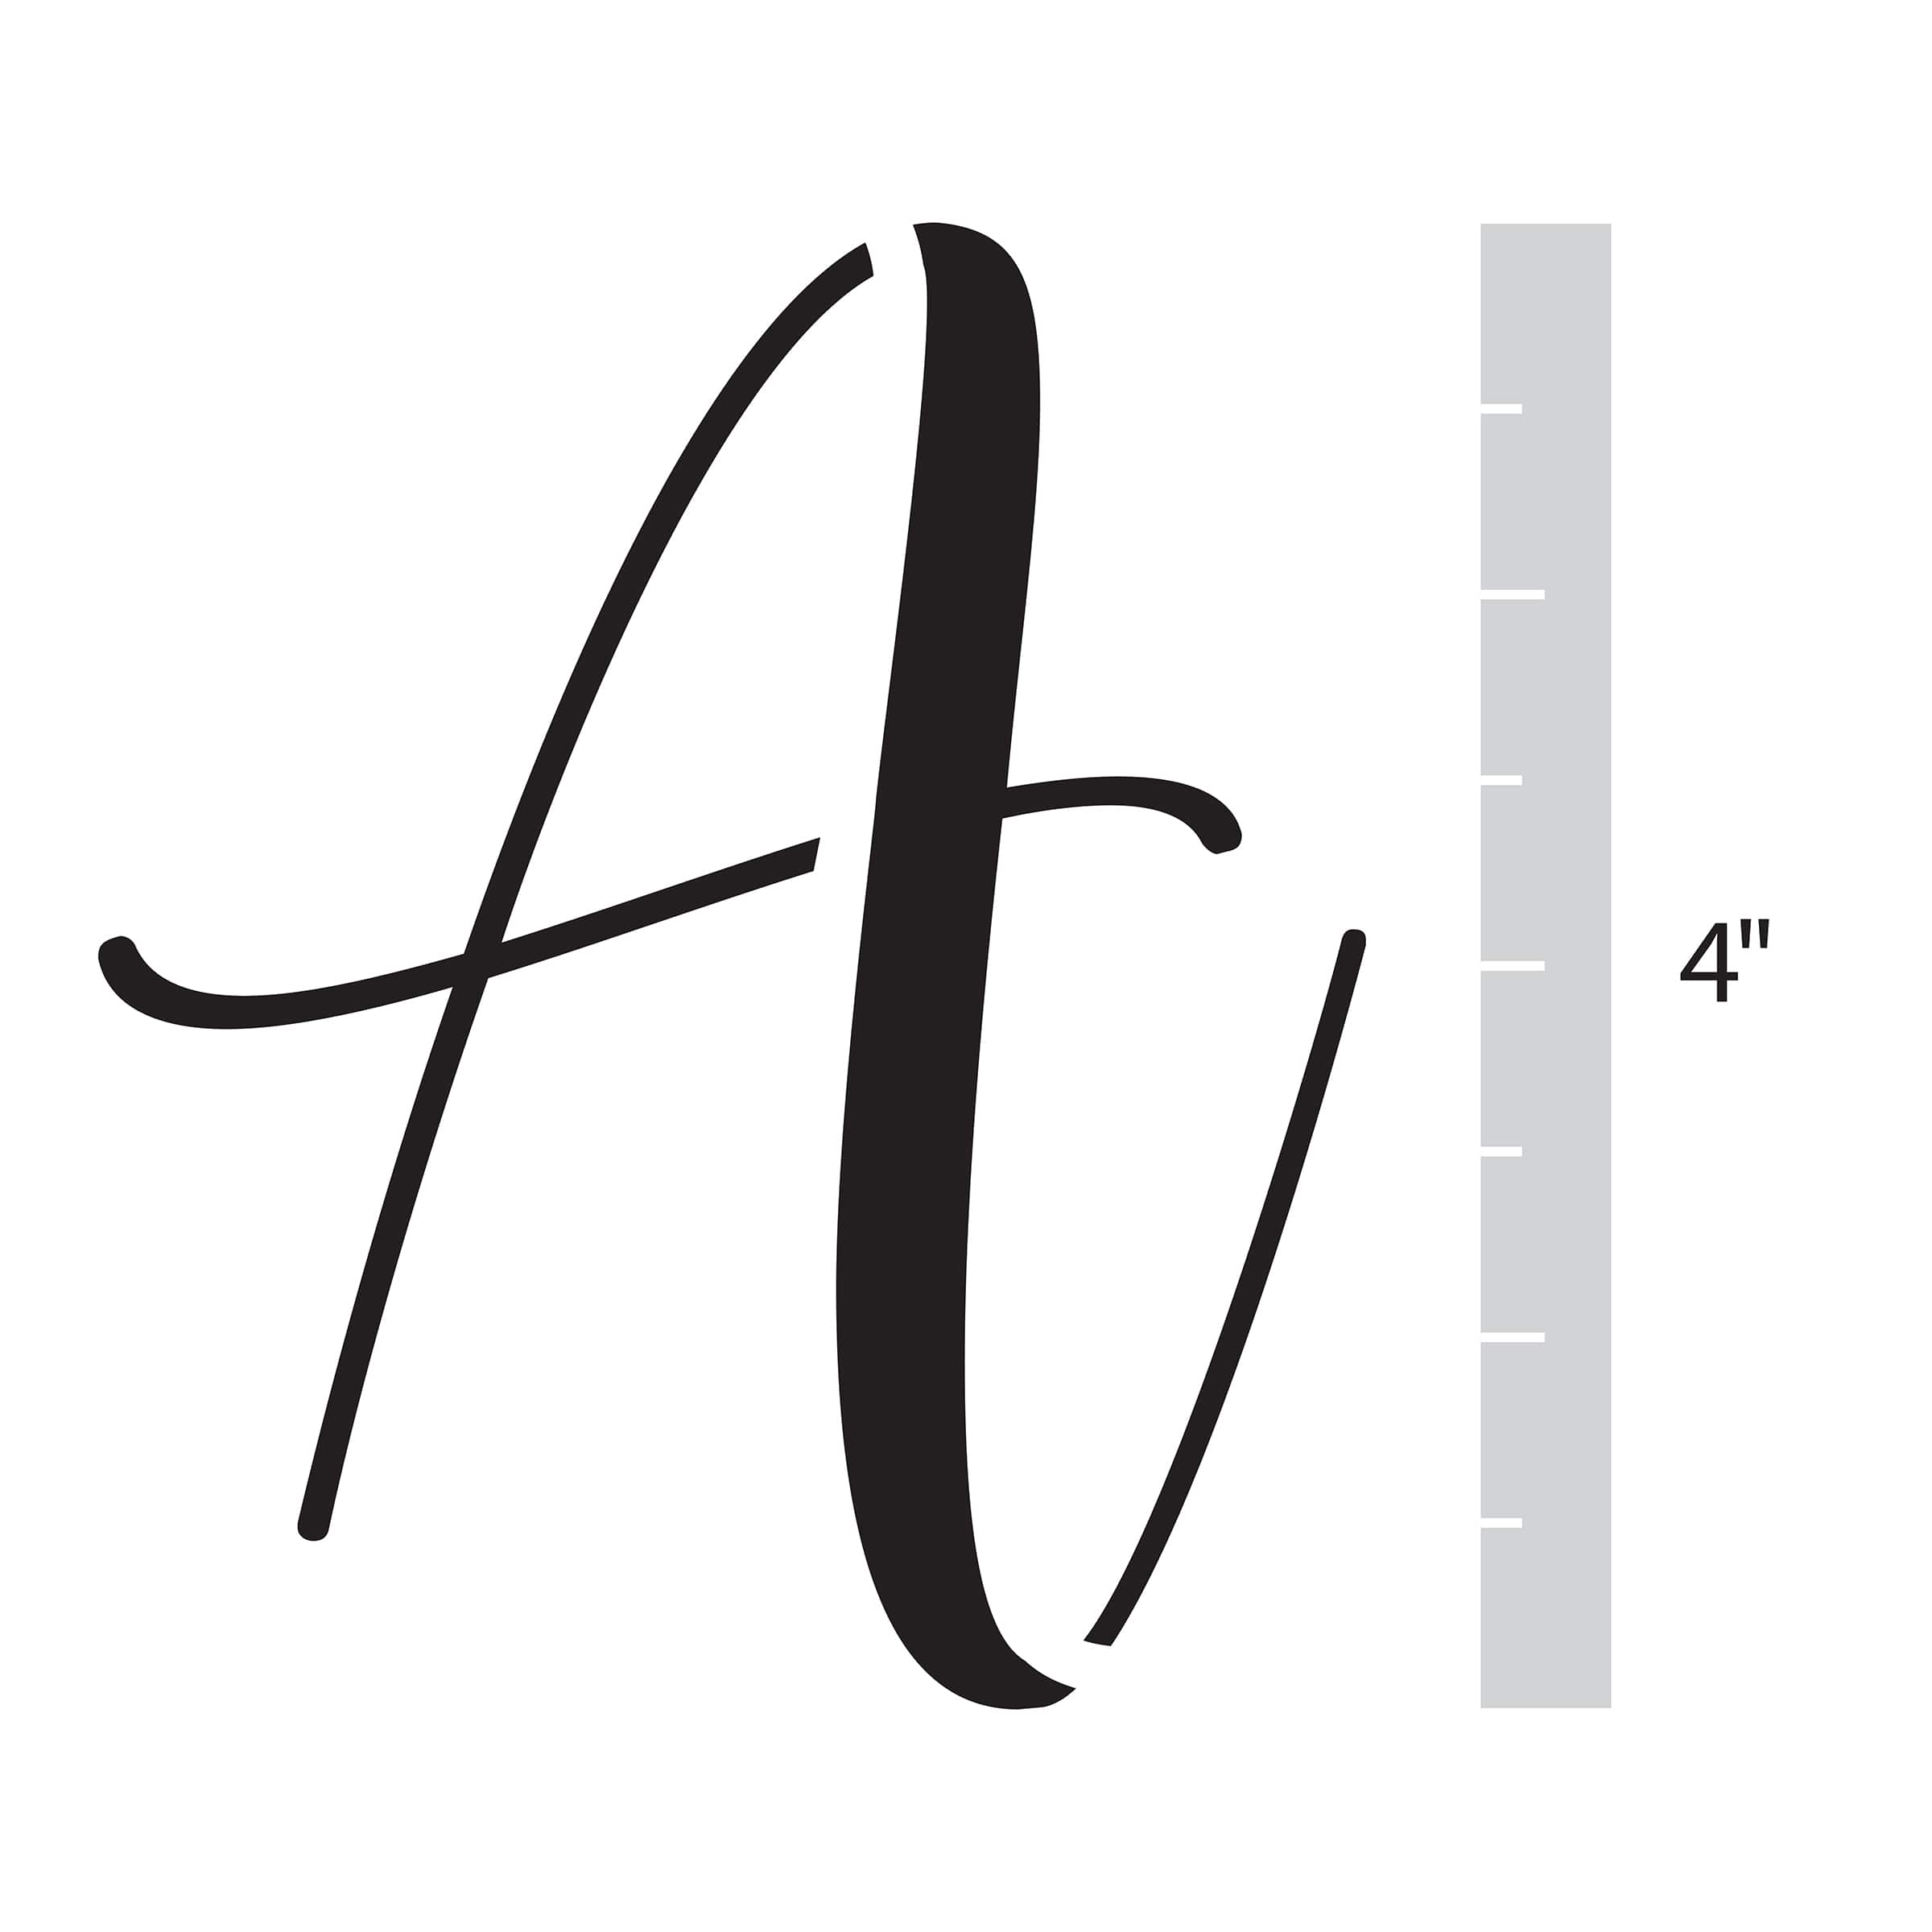 Mixed Font Alphabet Stencils by Craft Smart&#xAE;